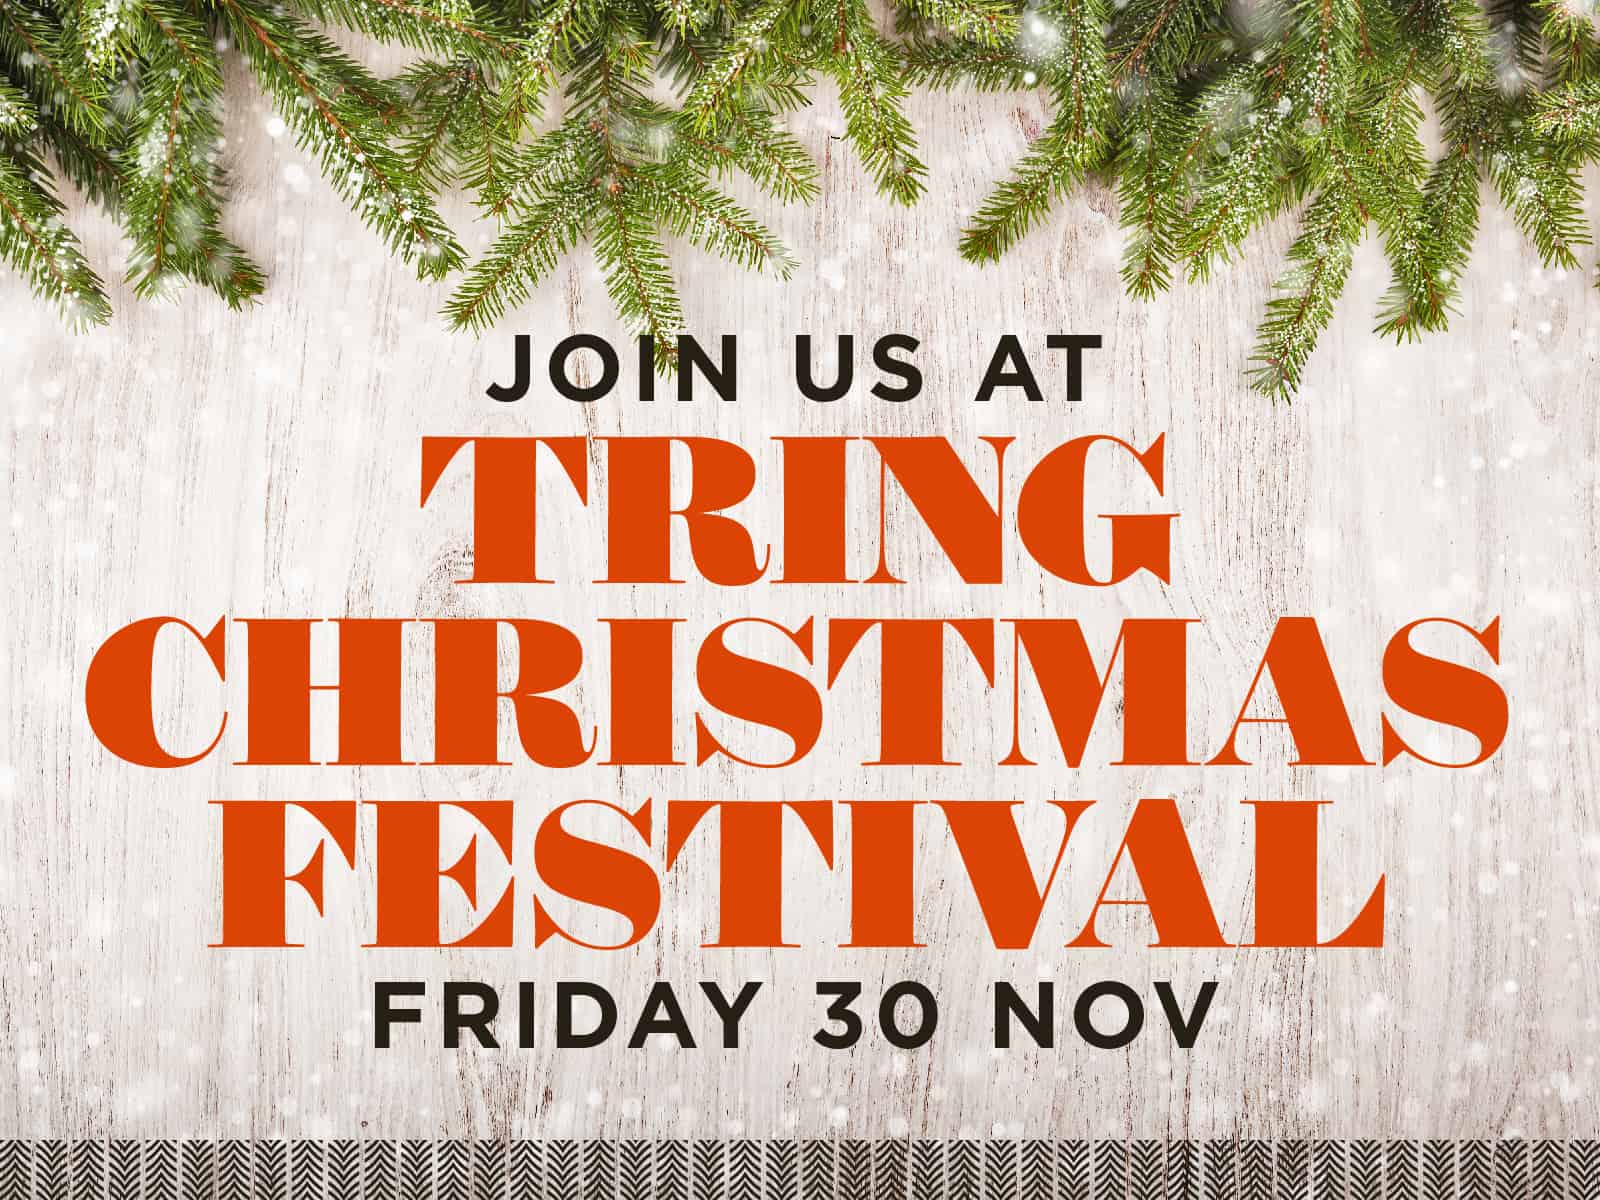 Tring Christmas Festival 2018